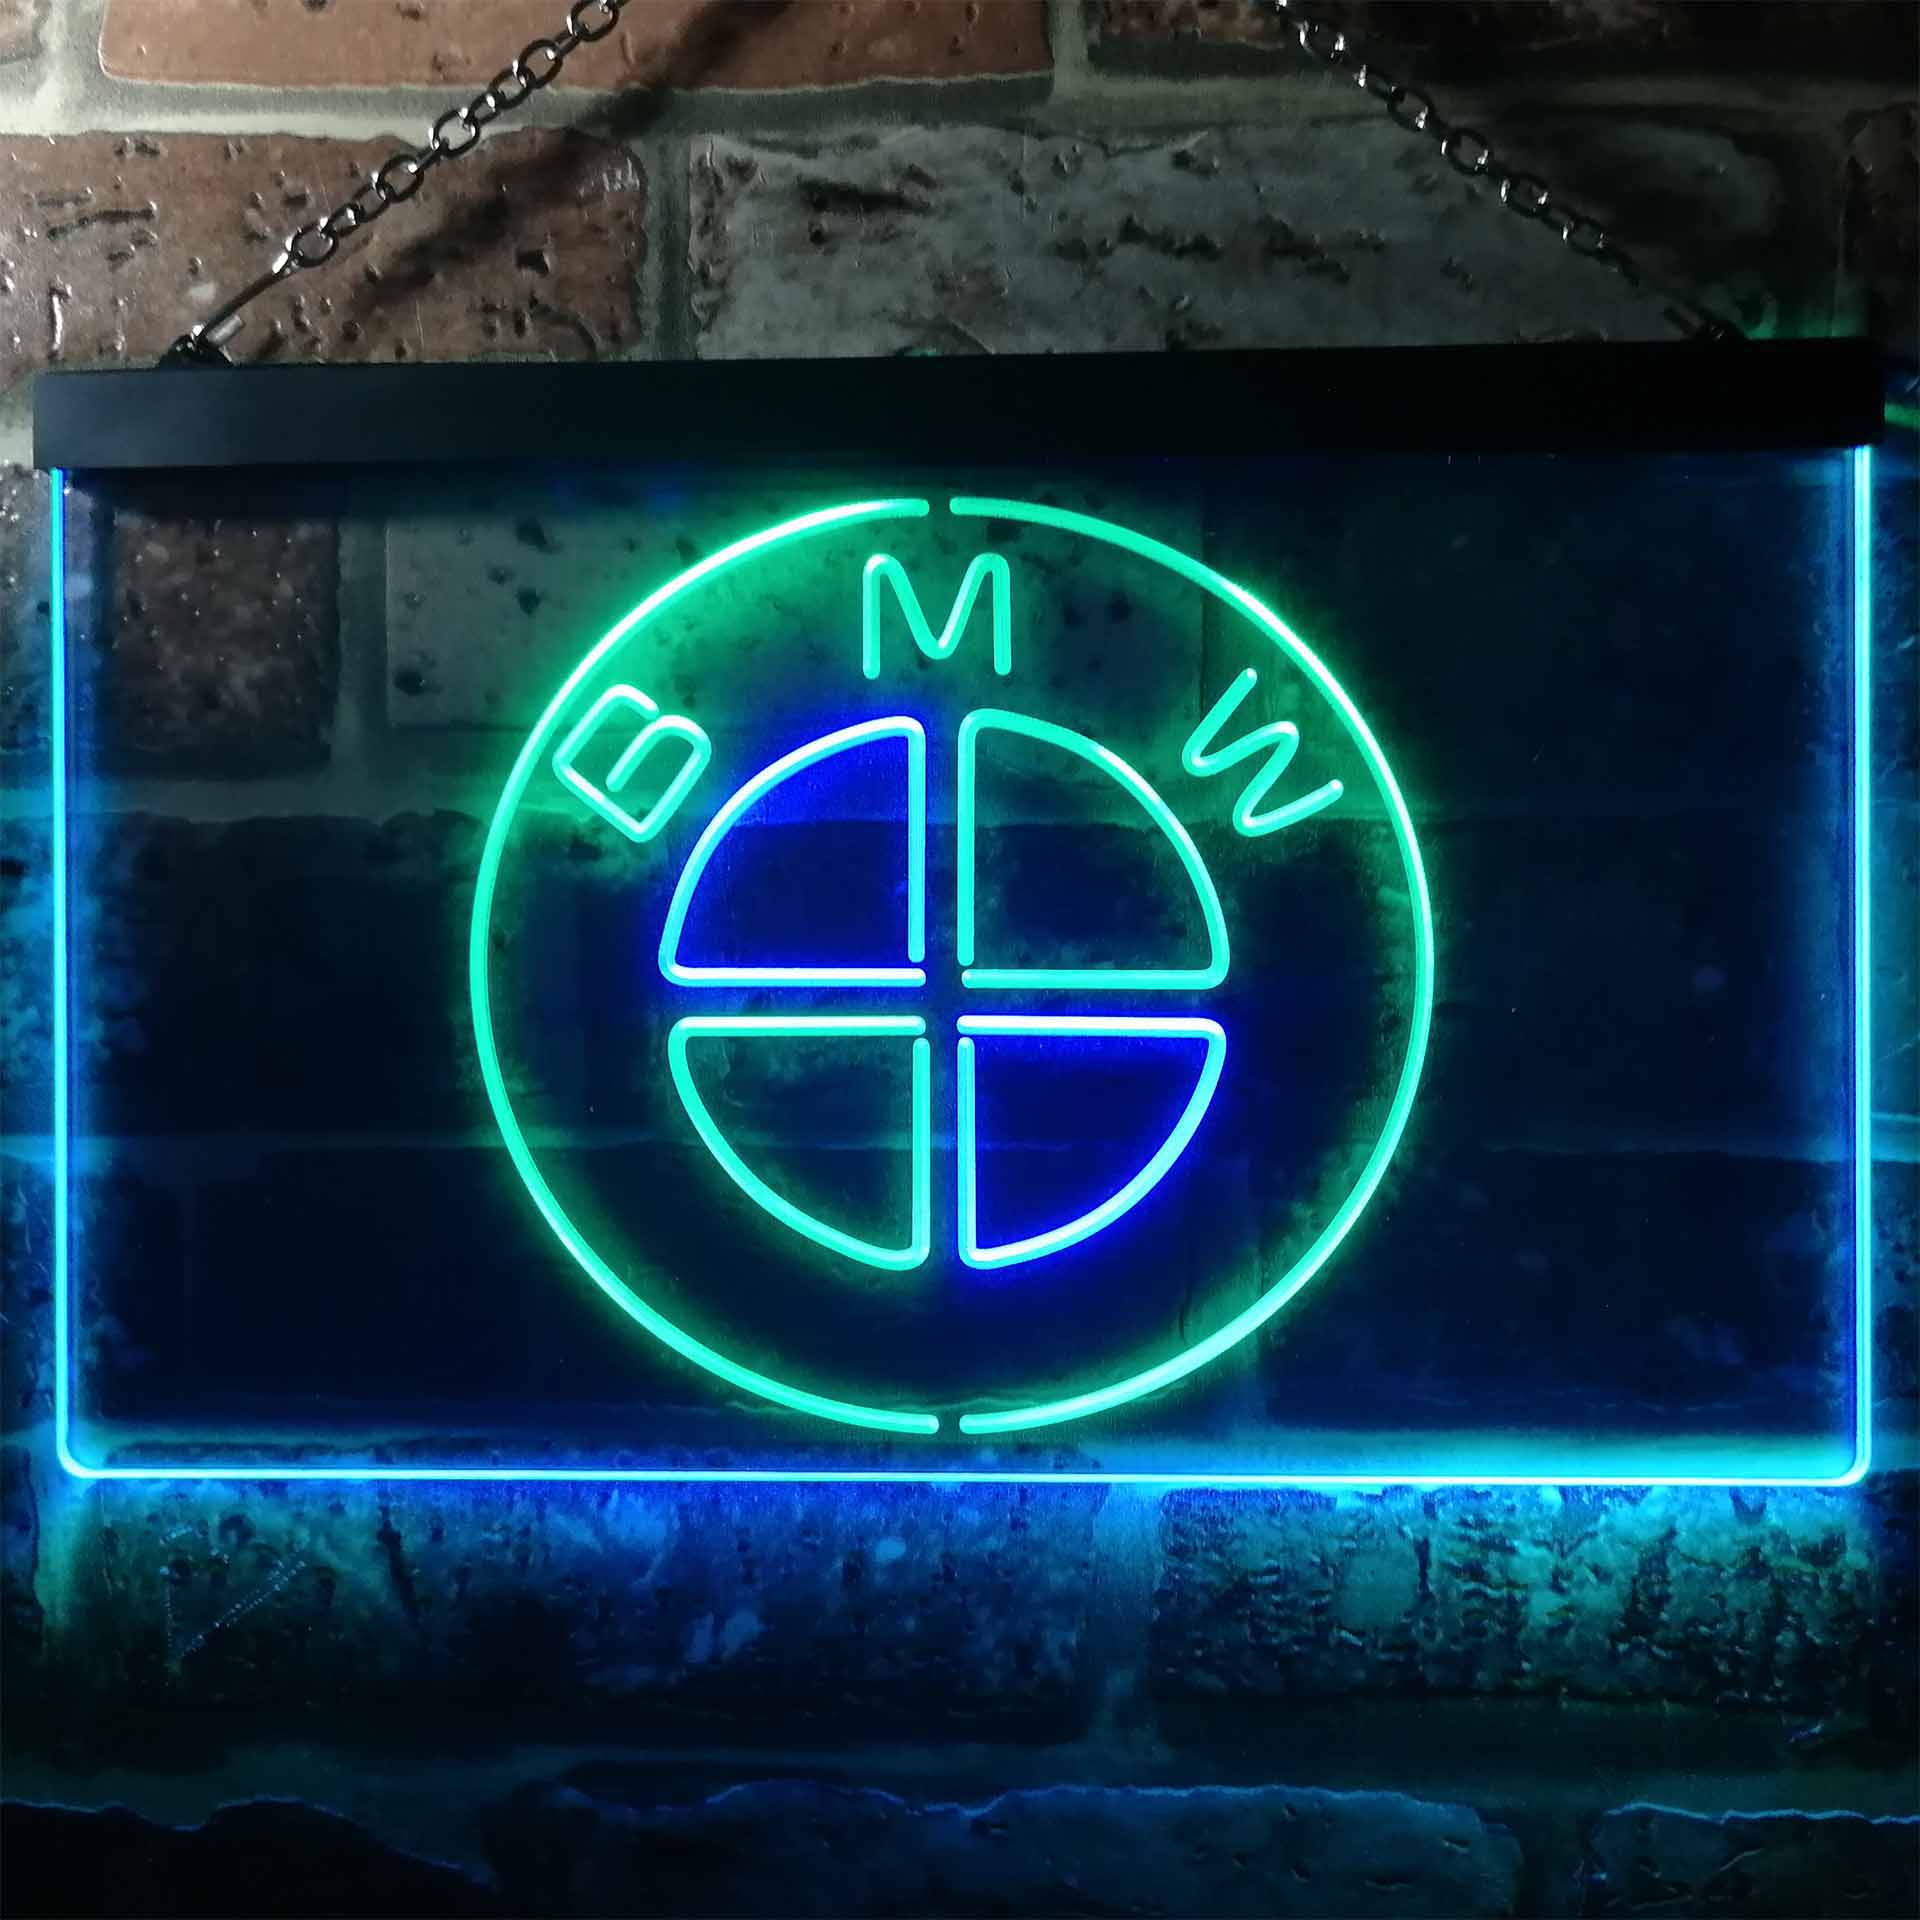 Bmw Light Wall Sign, Bmw Logo Sign, Bmw Led Sign, Bmw Neon Sign, Bmw  Lighted Sign, Garage Led Wall Decor, Garage Sign With Lights 